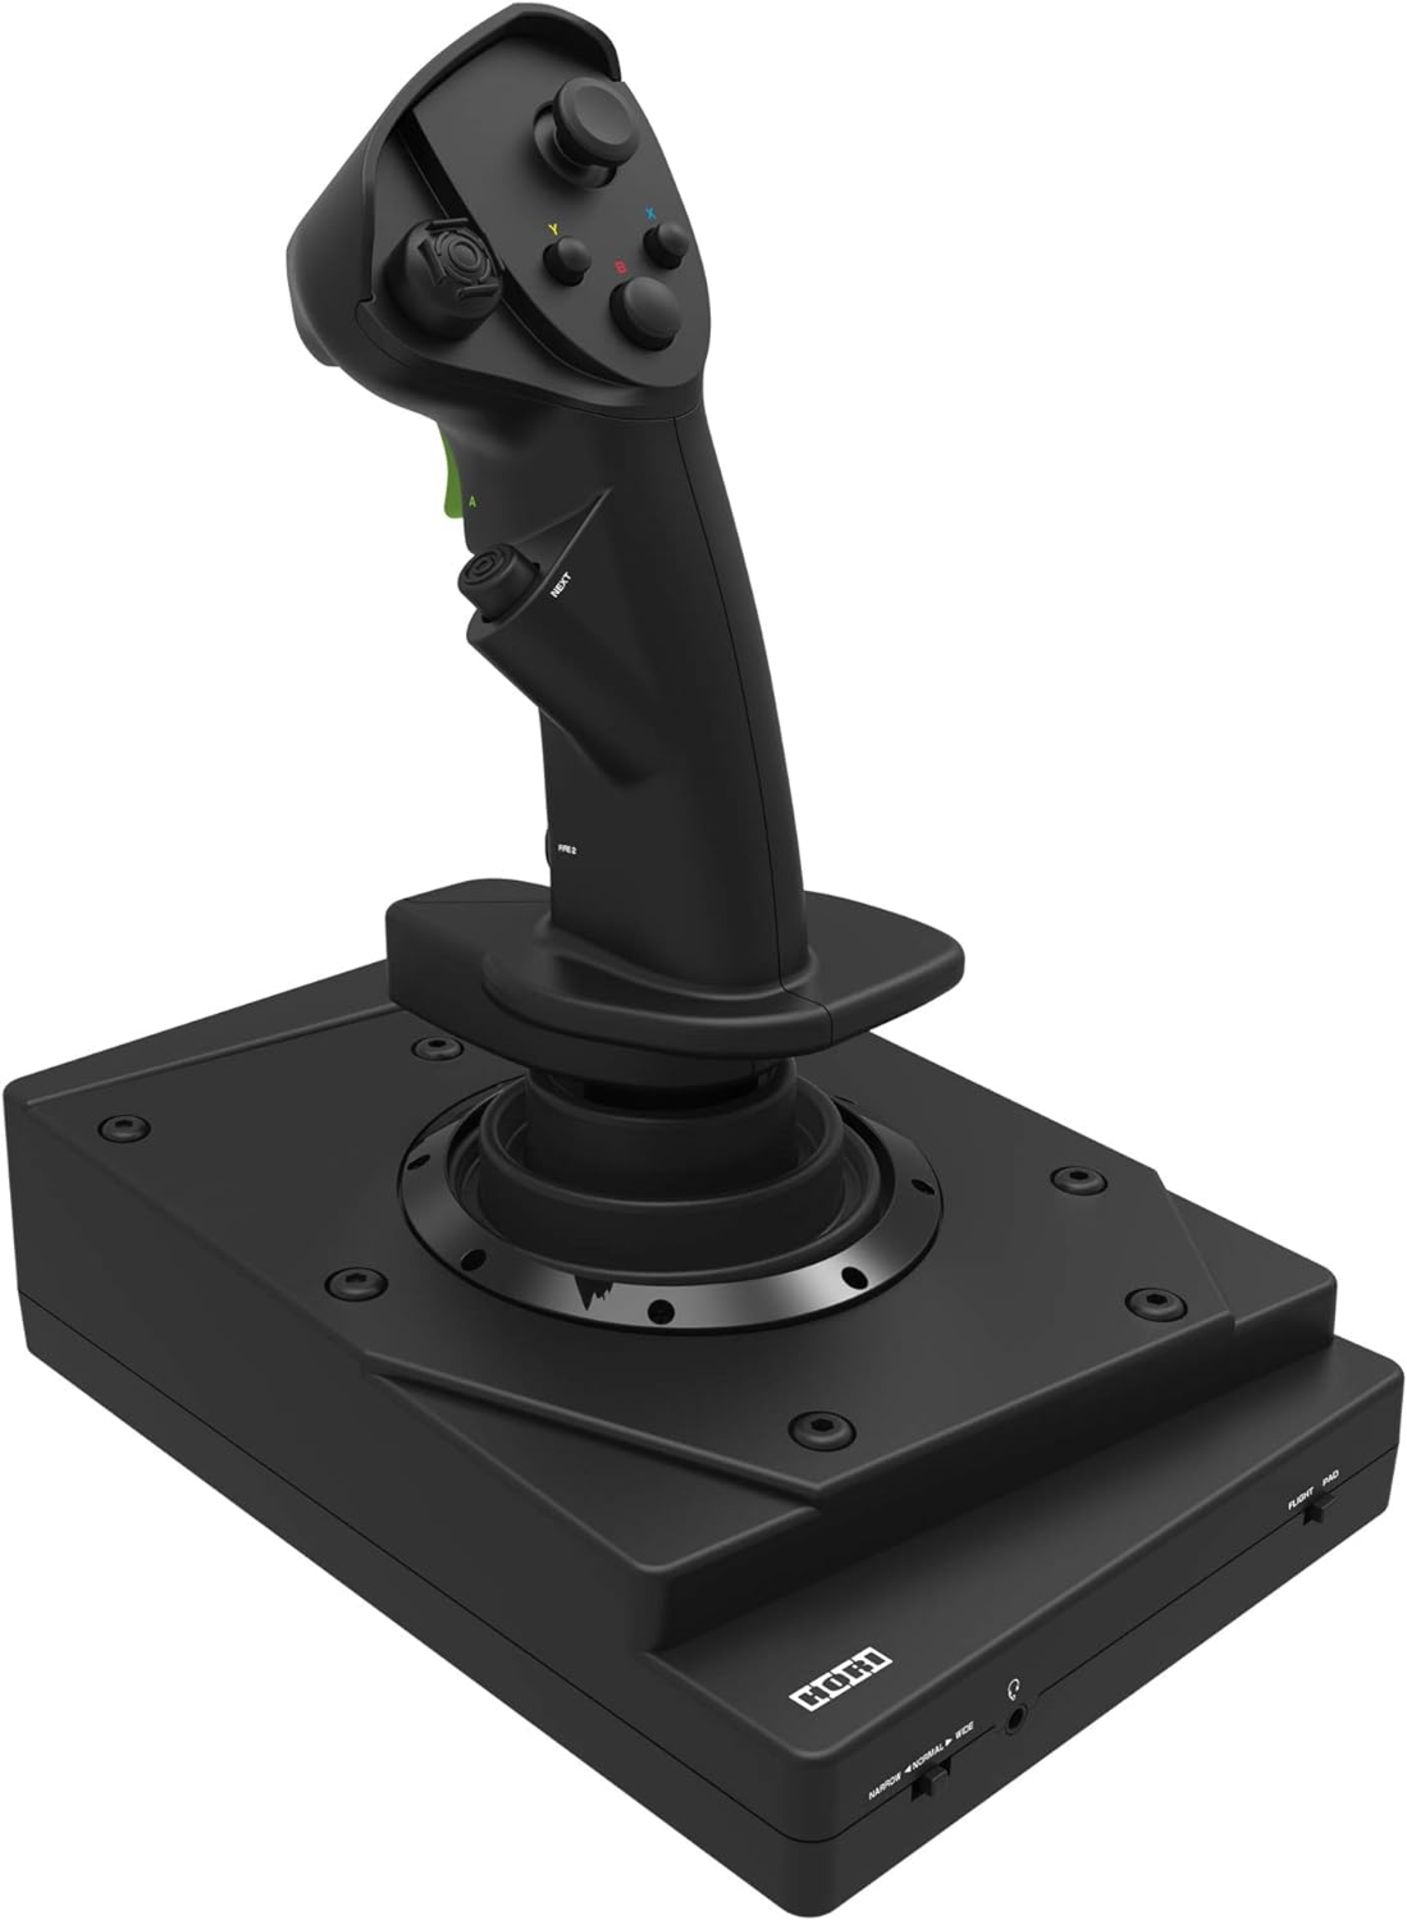 NEW & BOXED HORI Flightstick For Xbox Series X|S. RRP £209.99. The HORI Premium HOTAS Flight Stick - Image 2 of 5